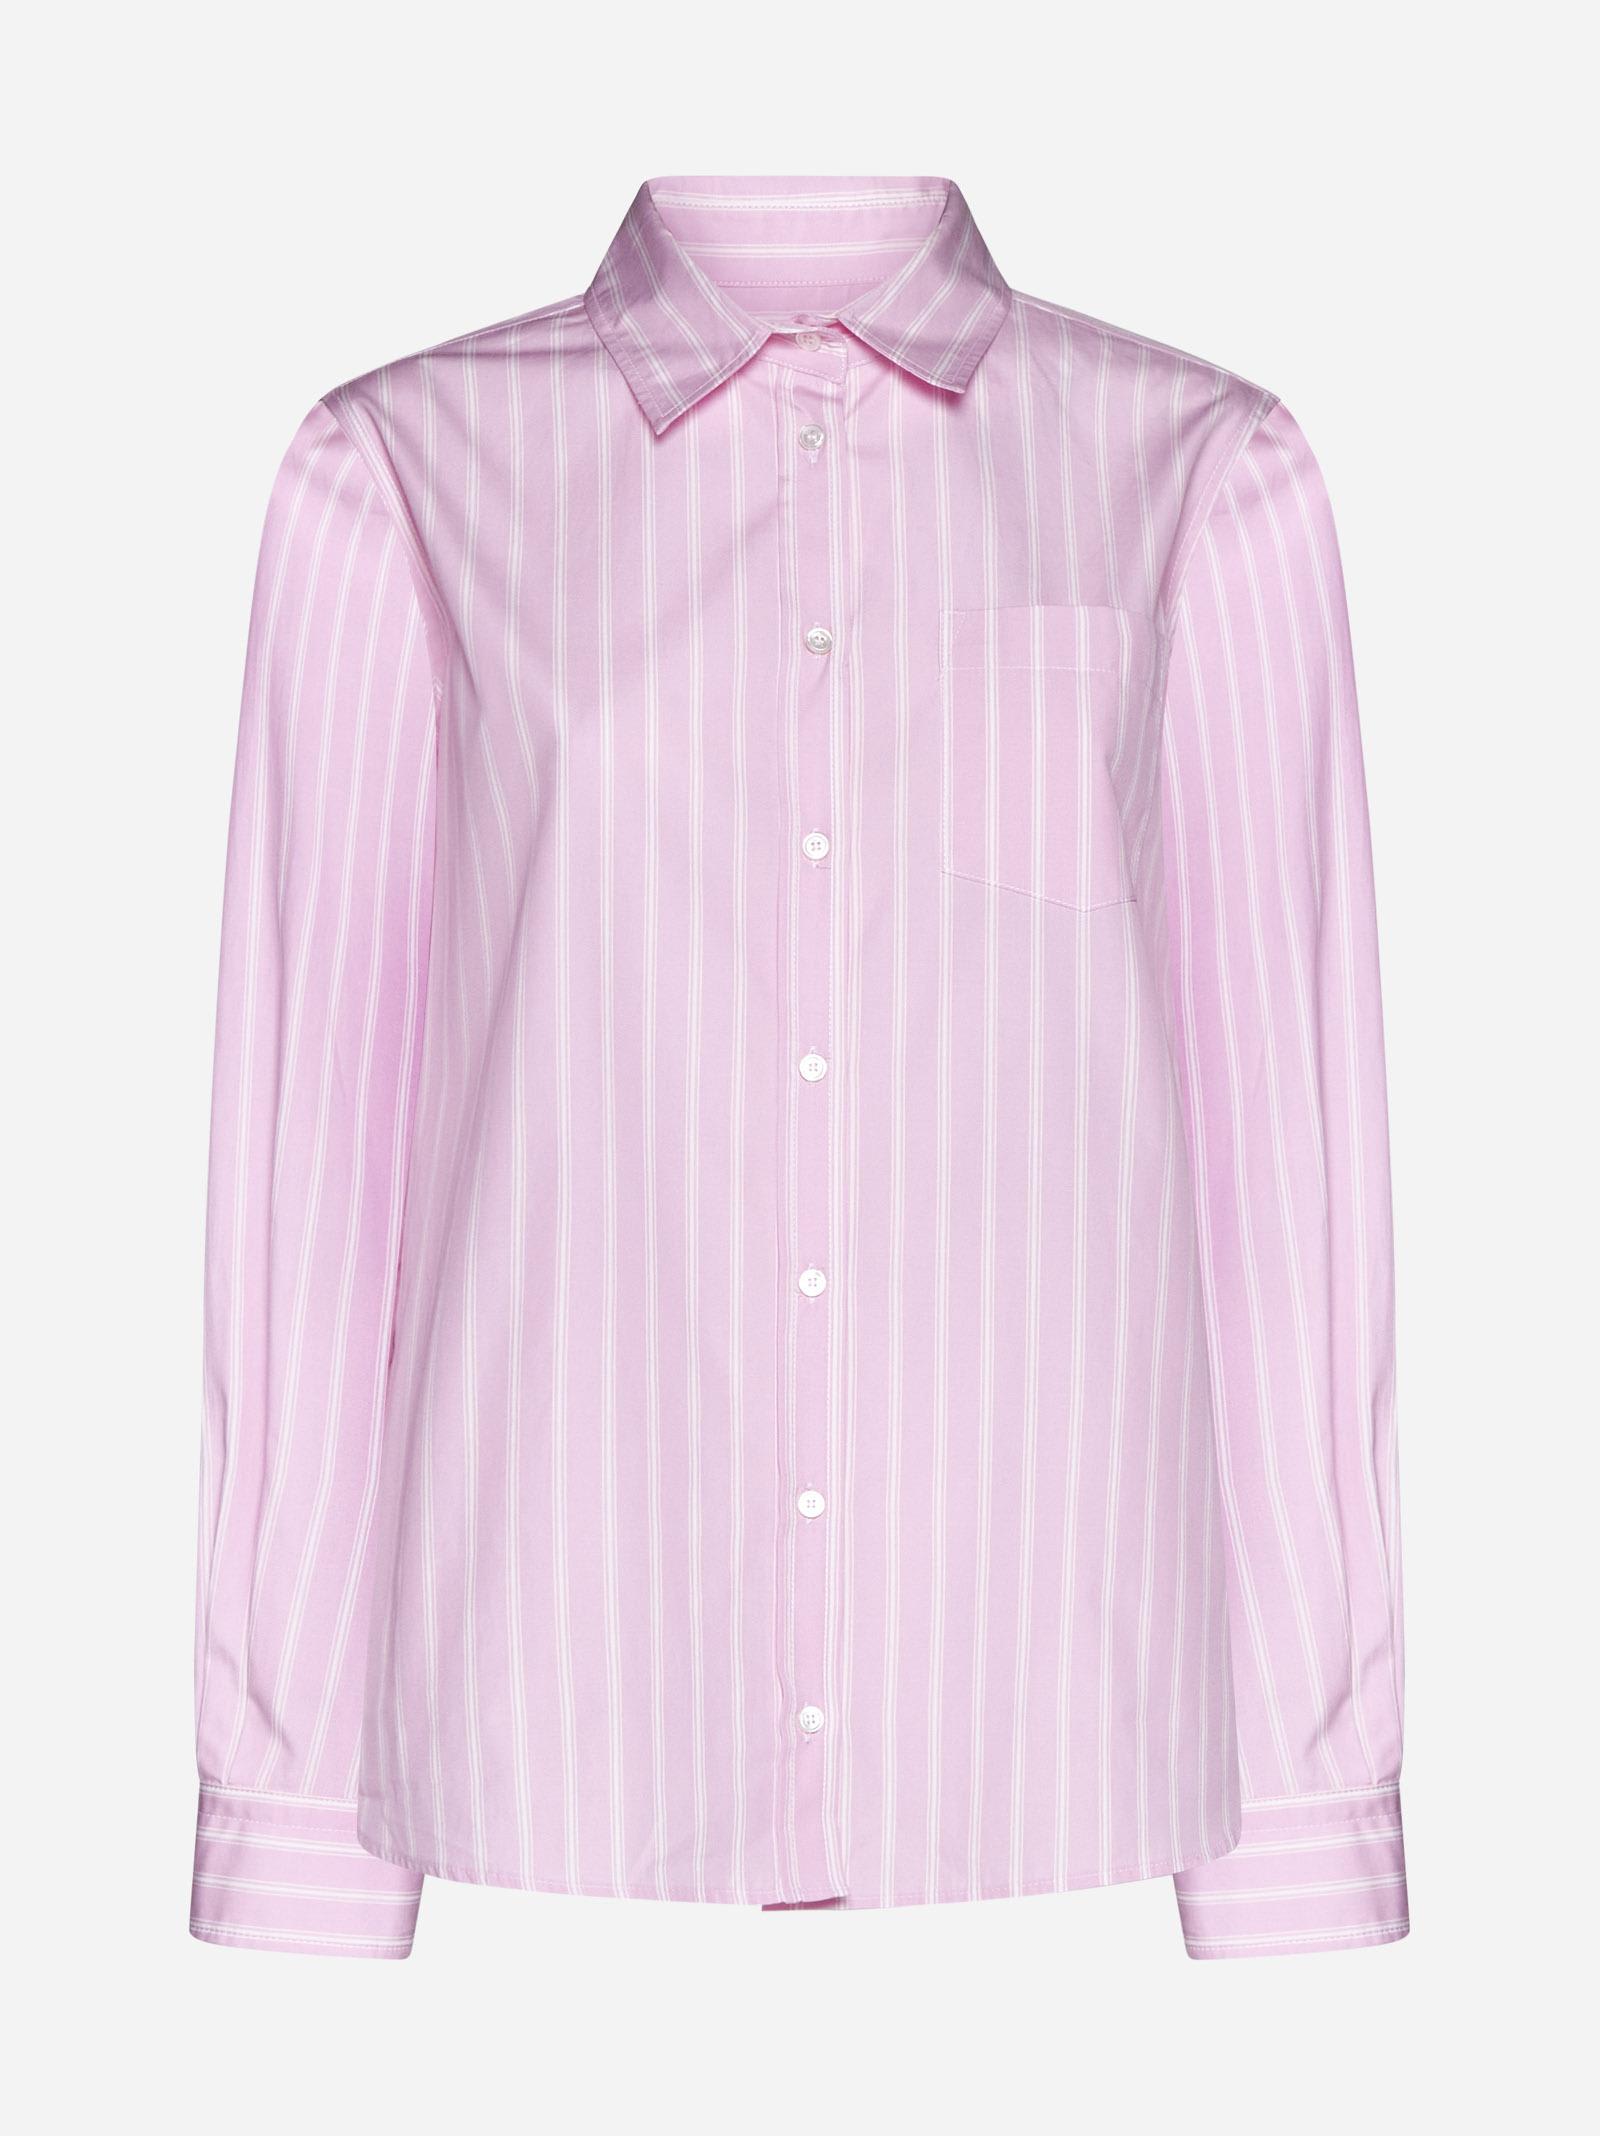 Bahamas Striped Cotton Shirt